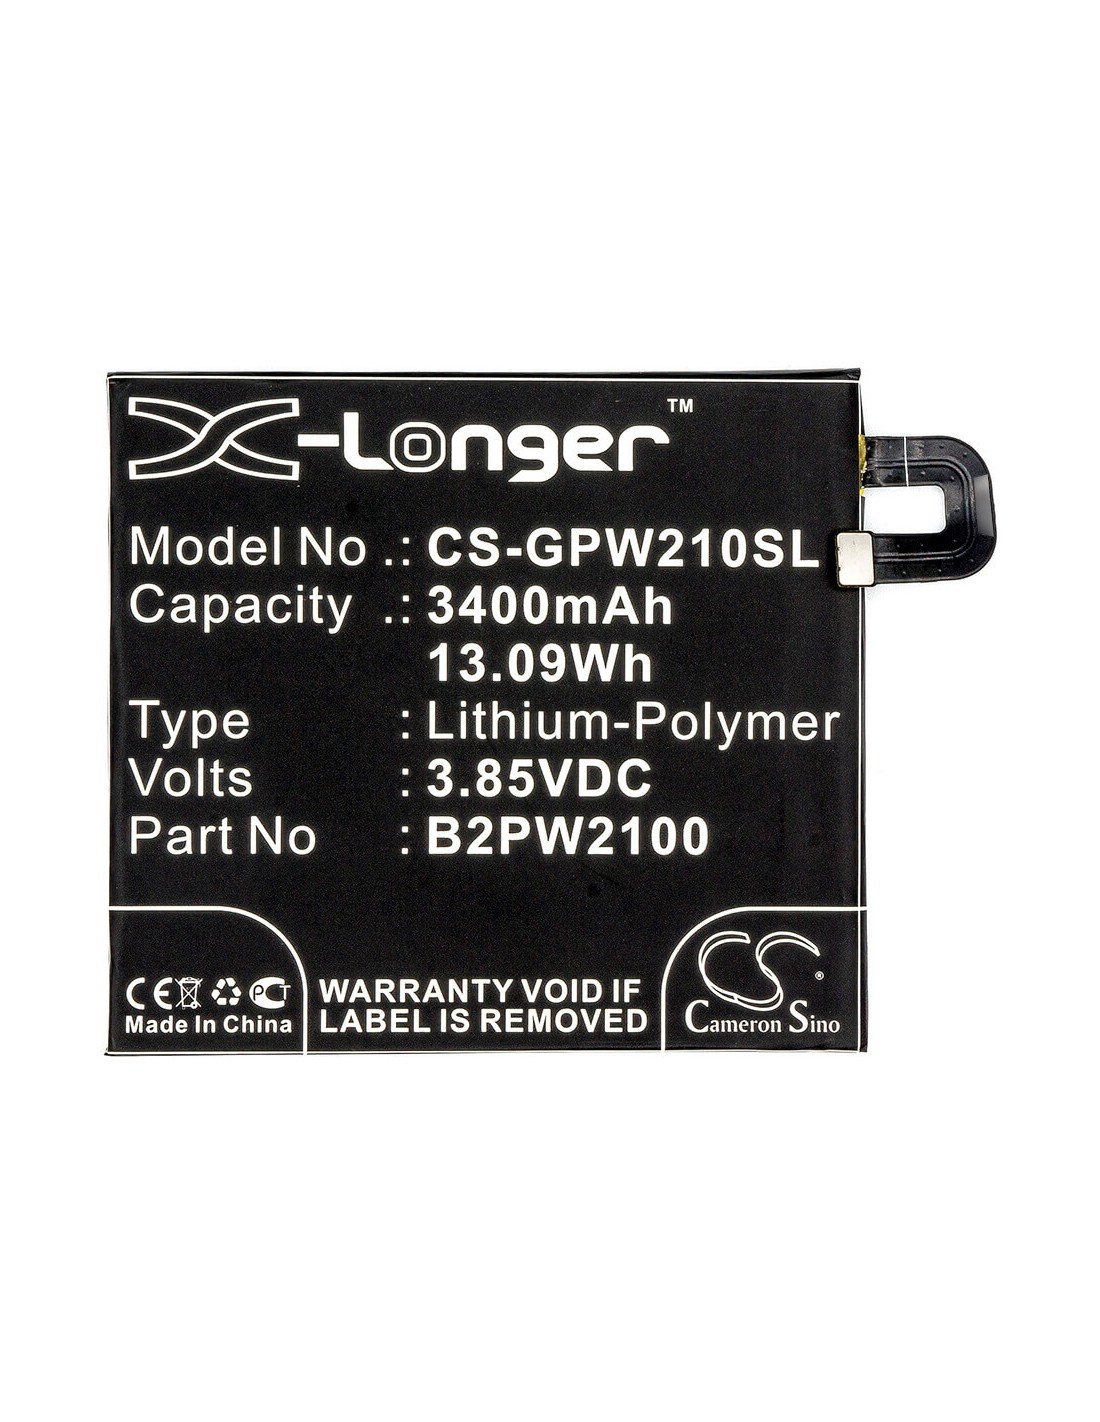 Battery for Google, G-2pw2100, G-2pw2100-021-b 3.85V, 3400mAh - 13.09Wh